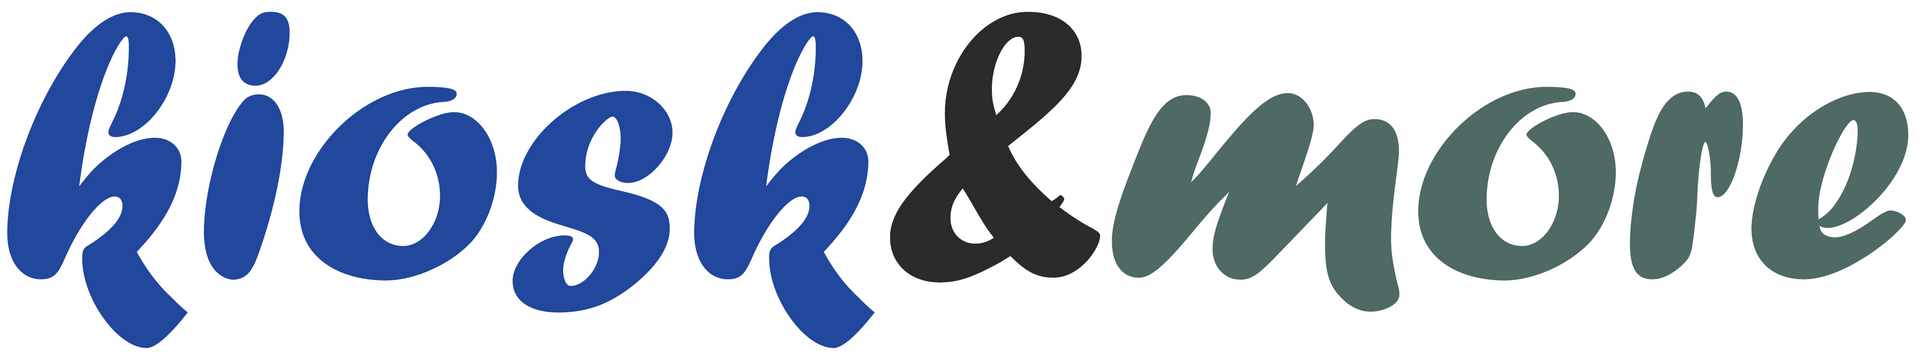 kiosk&more gmbh-logo